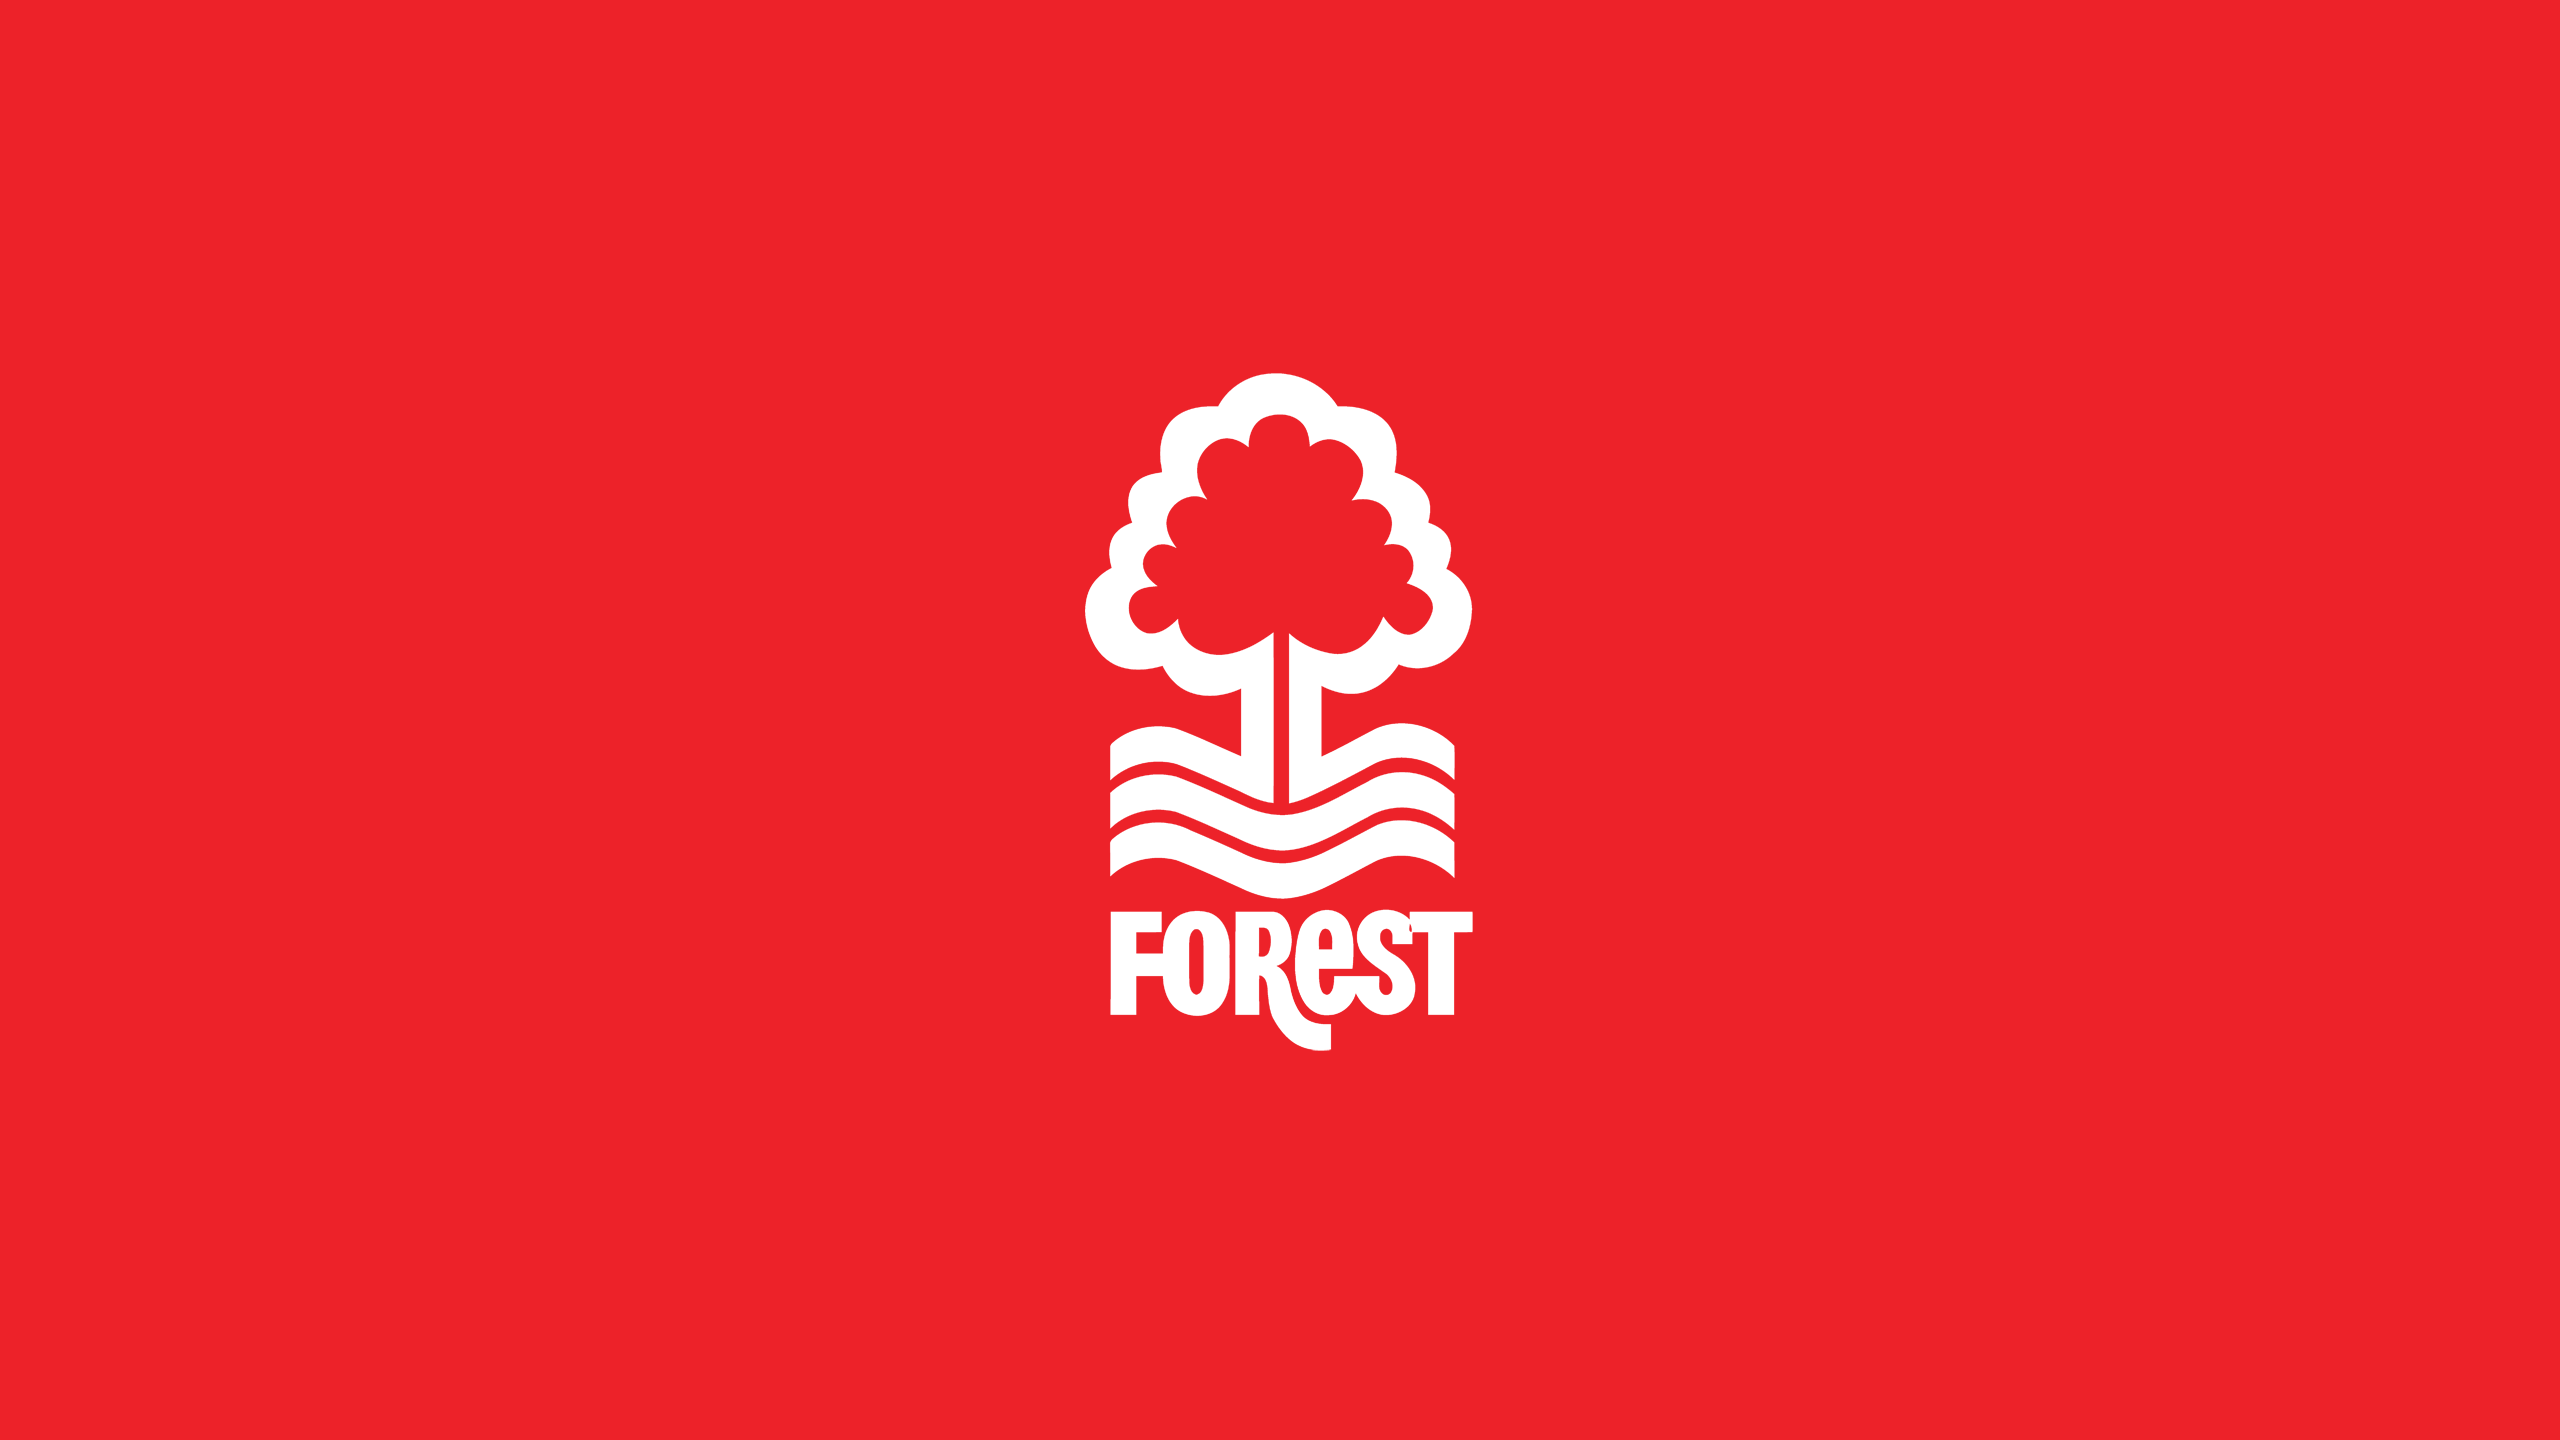 Nottingham Forest F.C. - English Premier League - Soccer - Square Bettor